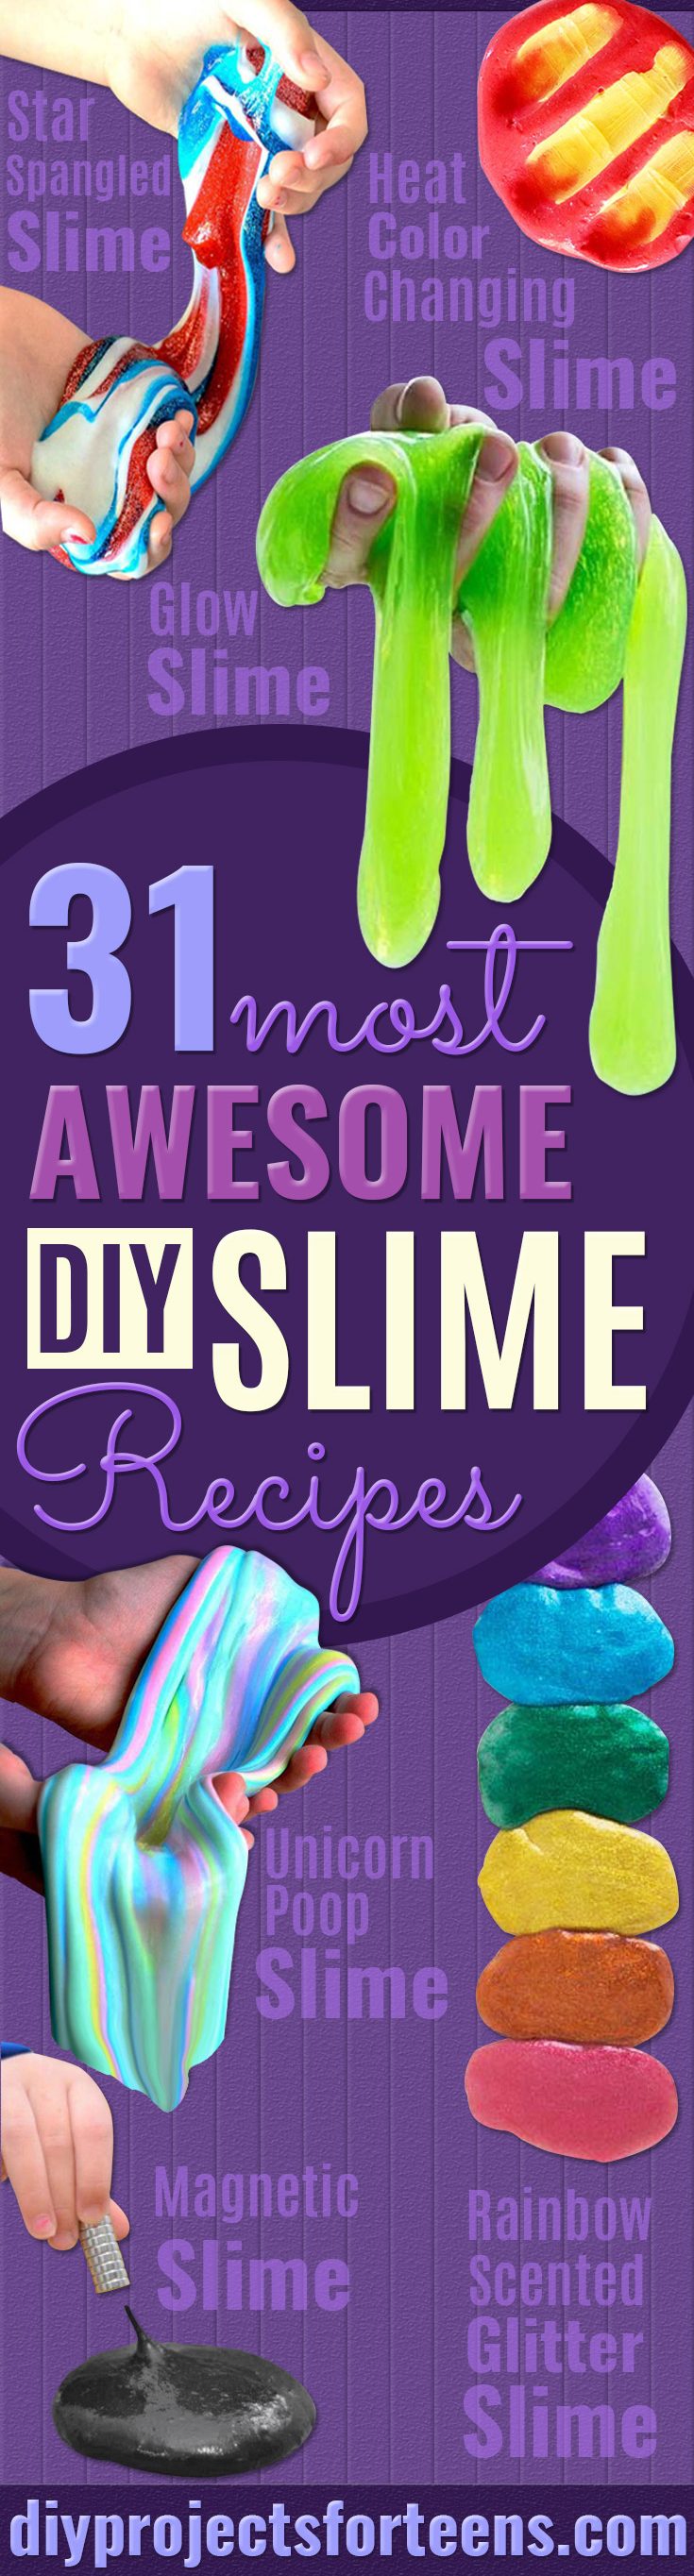 31 Cool DIY Slime Recipes